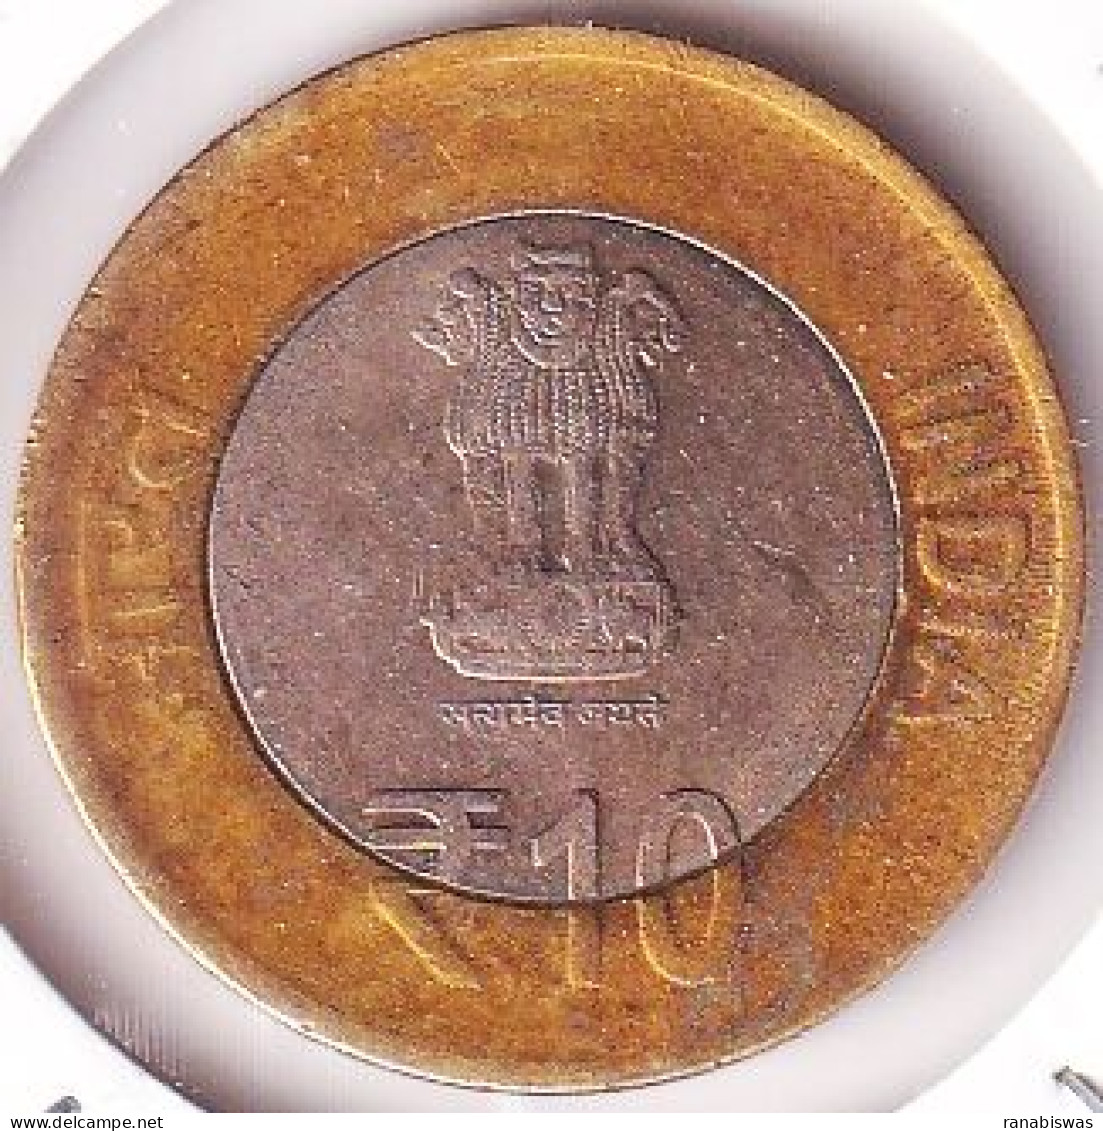 INDIA COIN LOT 446, 10 RUPEES 2013, COIR BOARD, CALCUTTA MINT, XF, SCARE - India